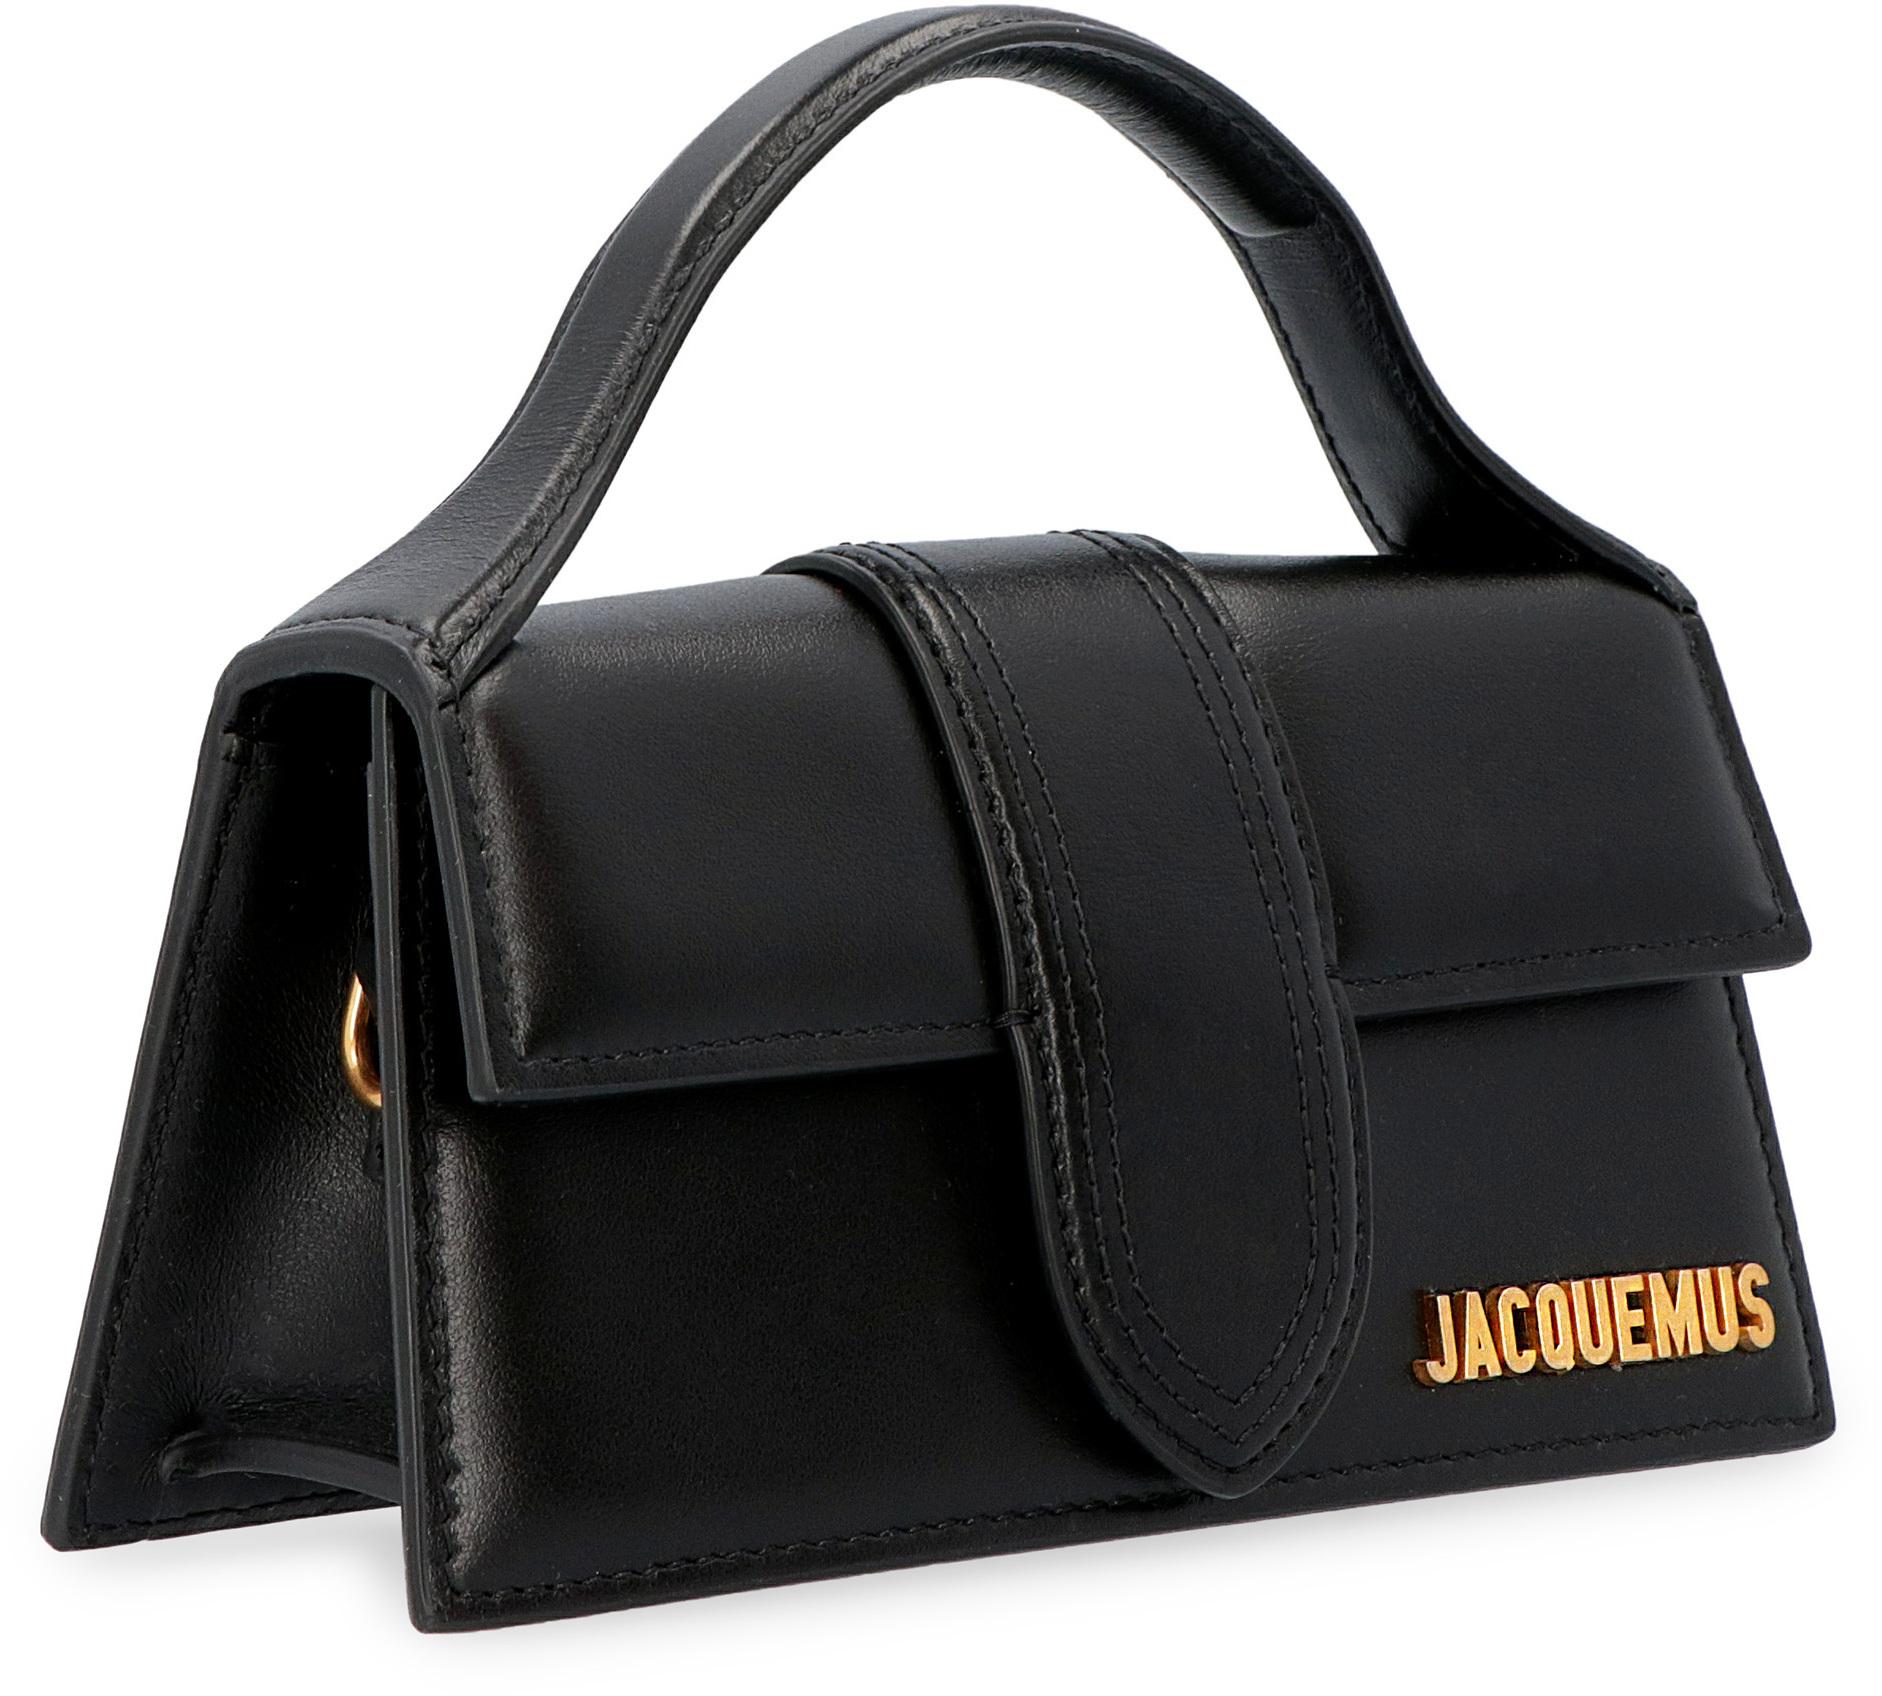 Jacquemus Le Grand Bambino Leather Handbag in Black - Lyst